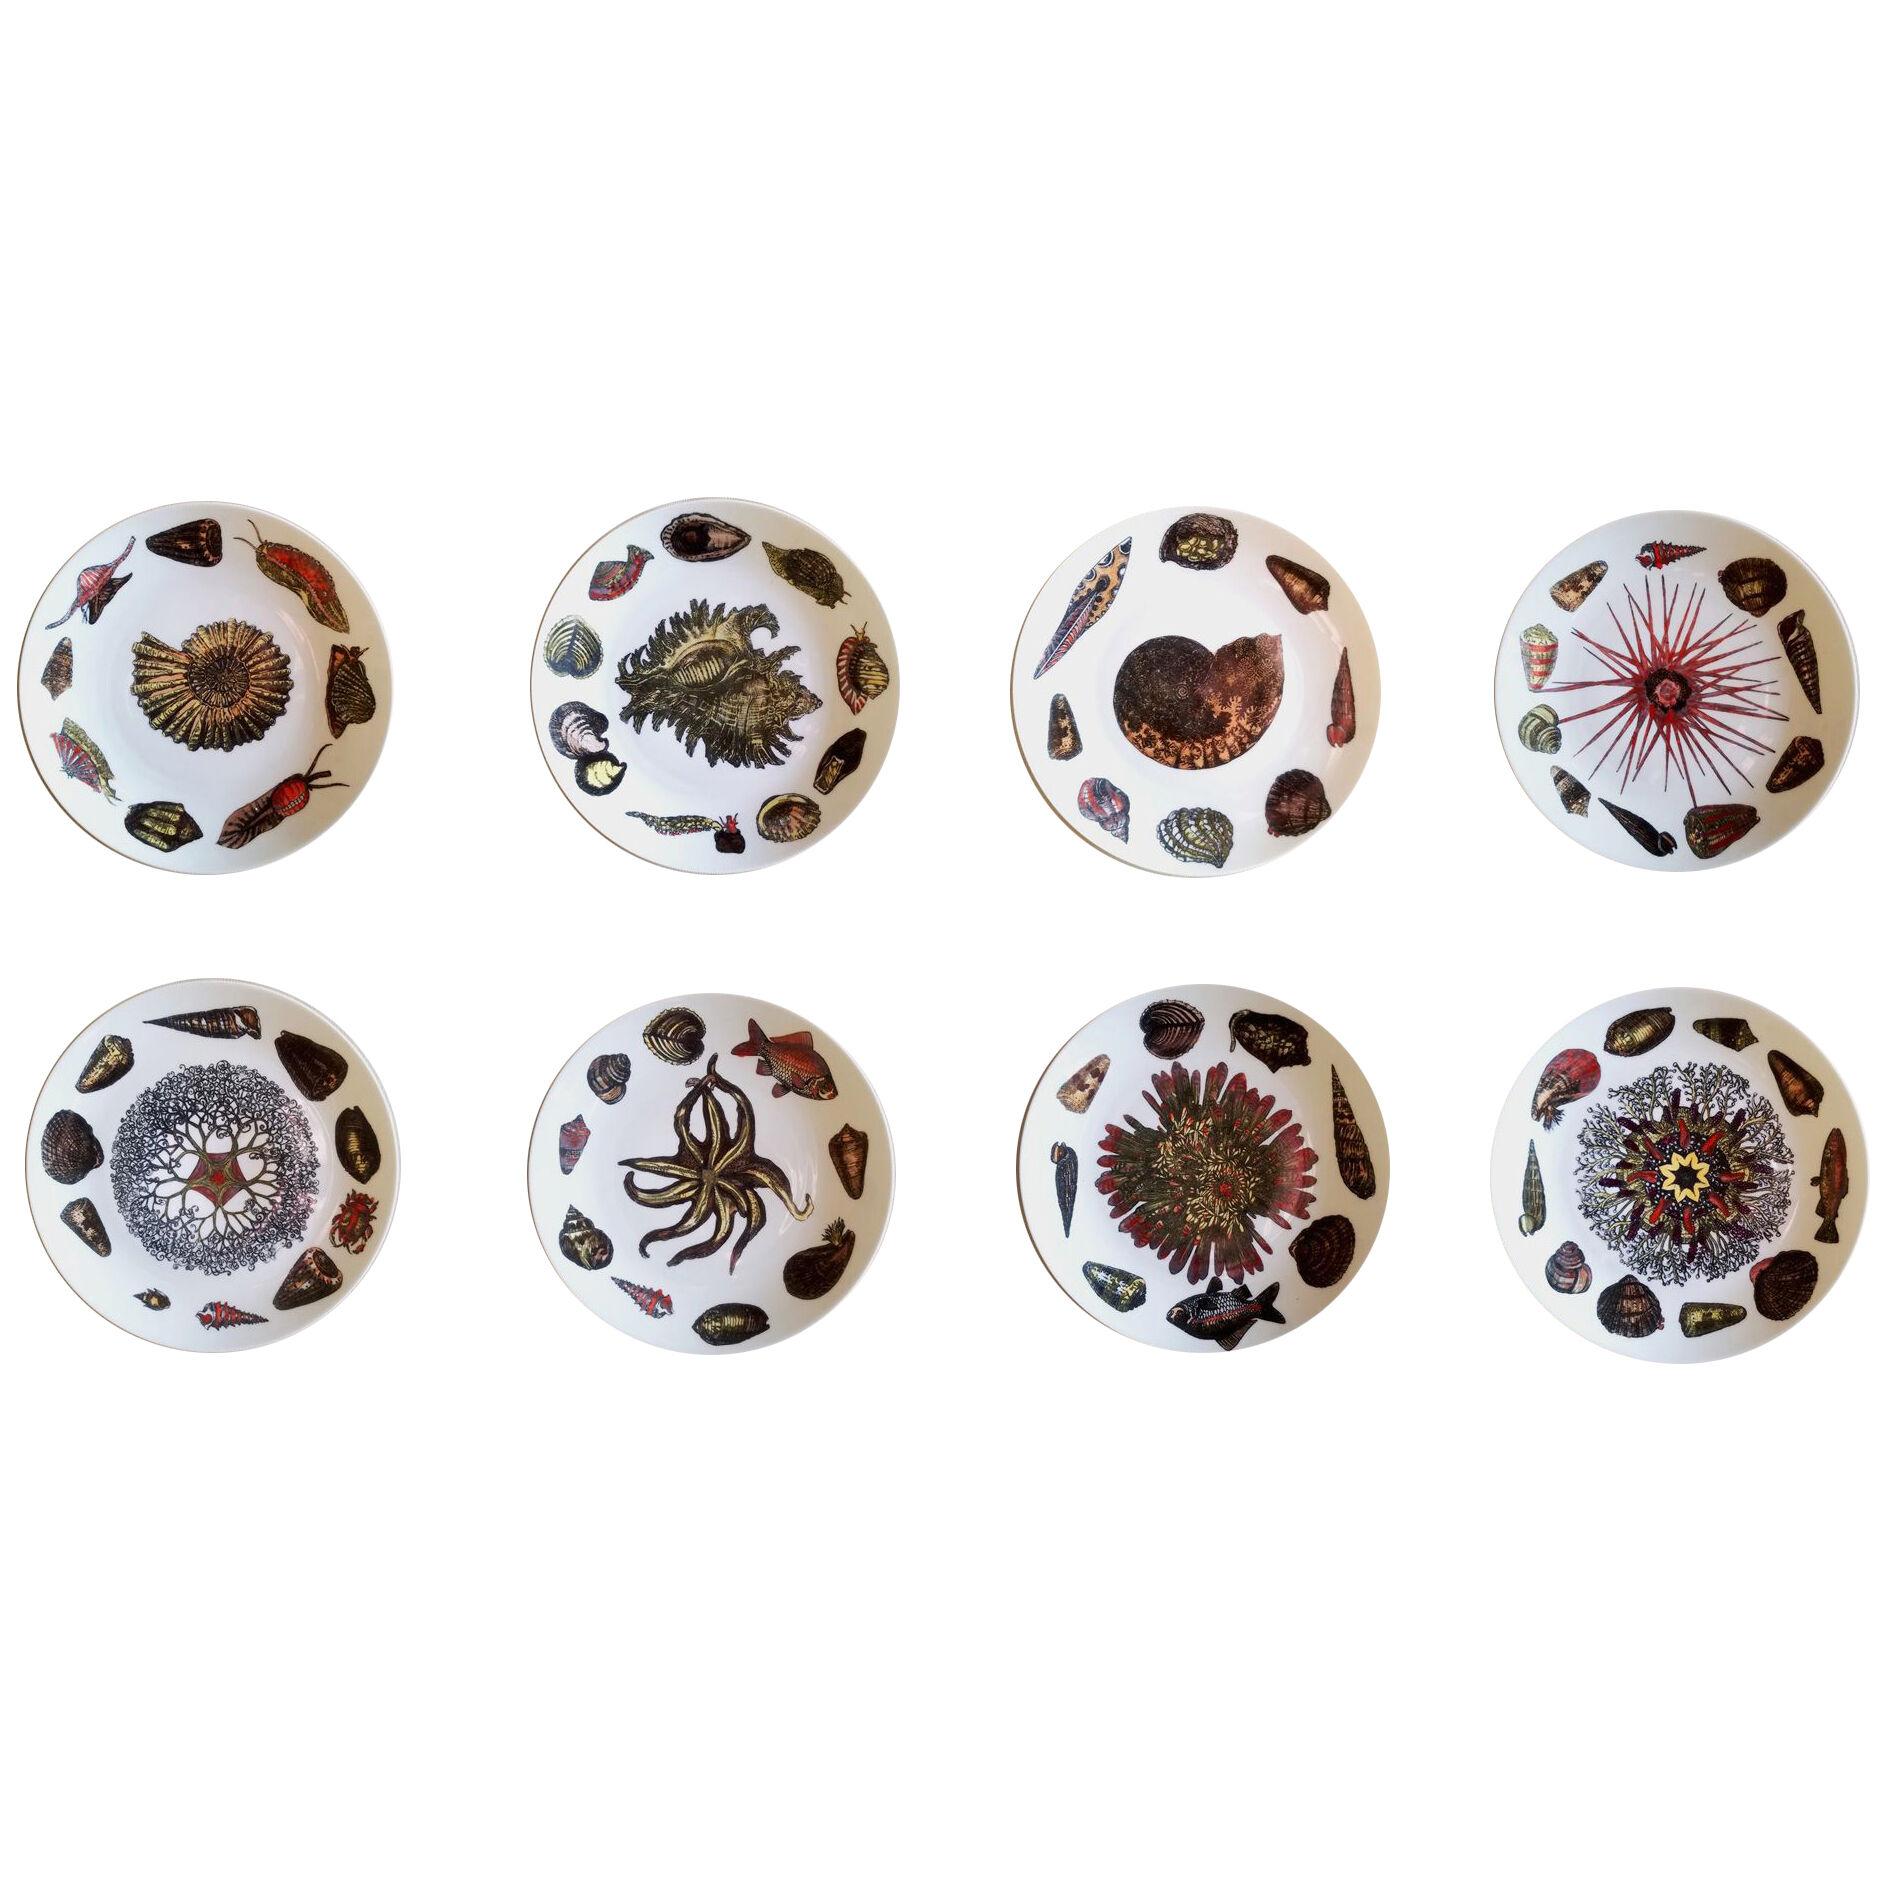 Piero Fornasetti Porcelain Plates With Sea Shells, Conchiglie Pattern